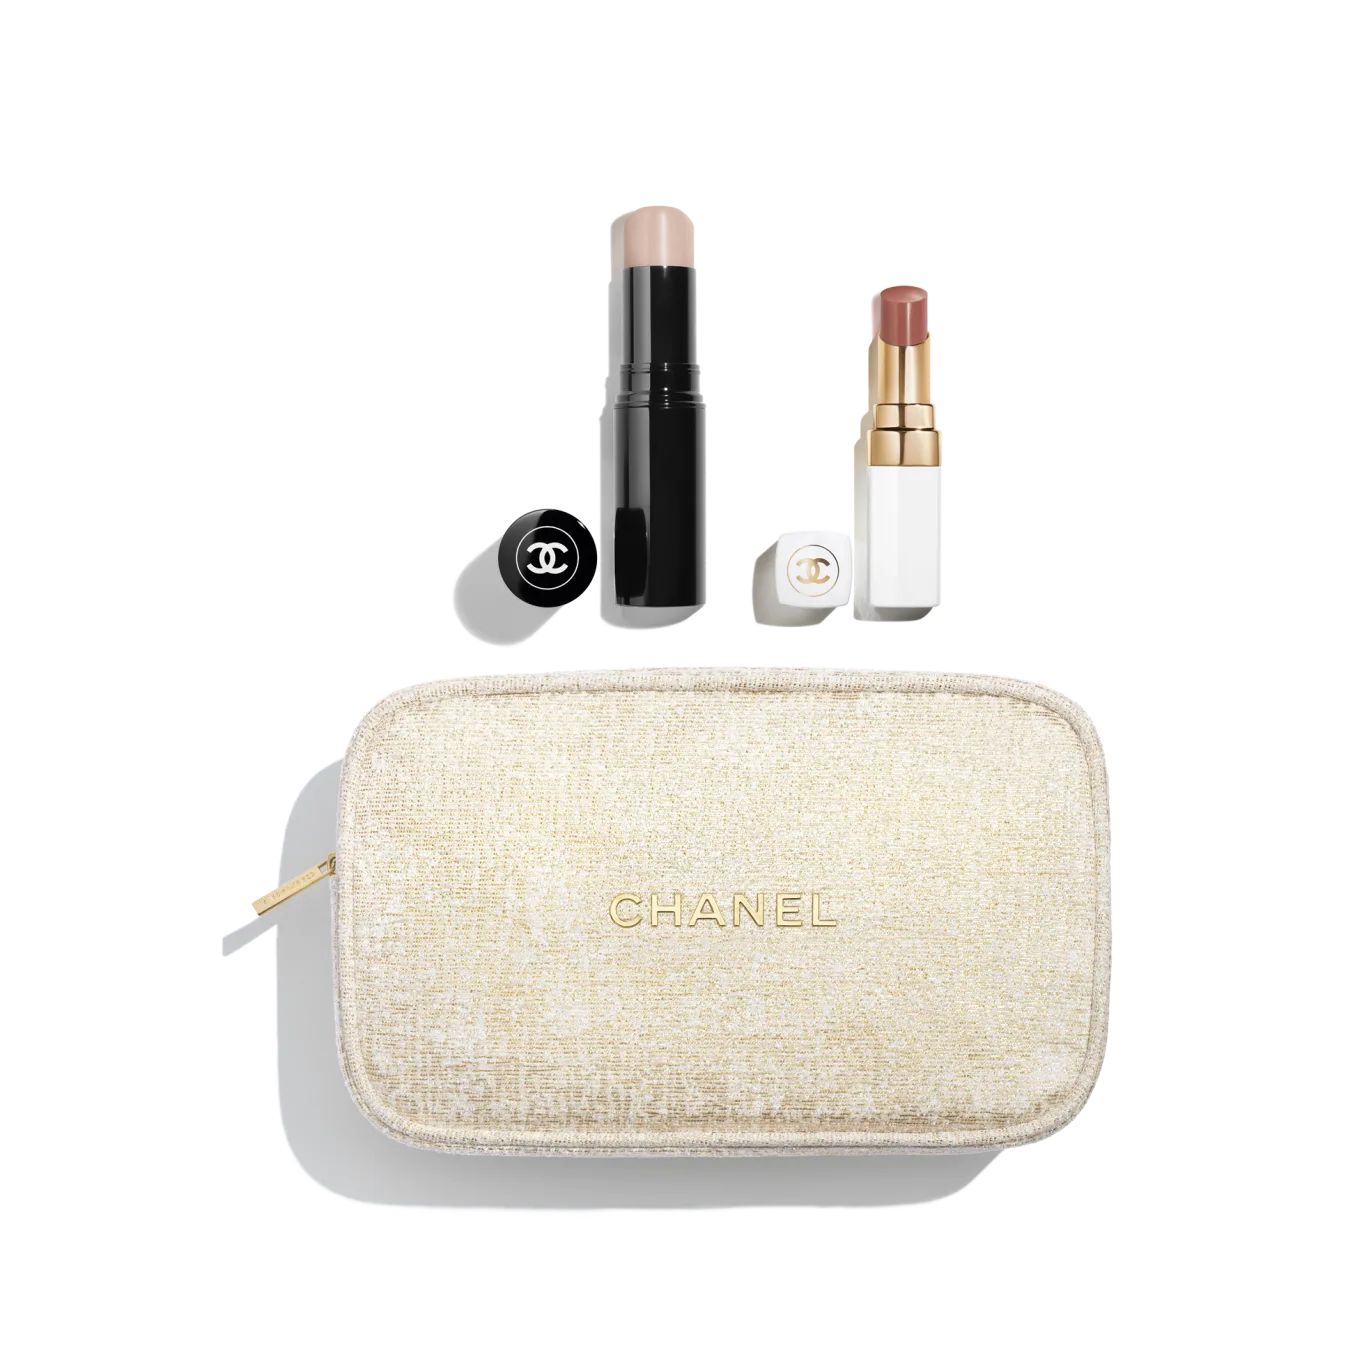 Makeup Set | Chanel, Inc. (US)